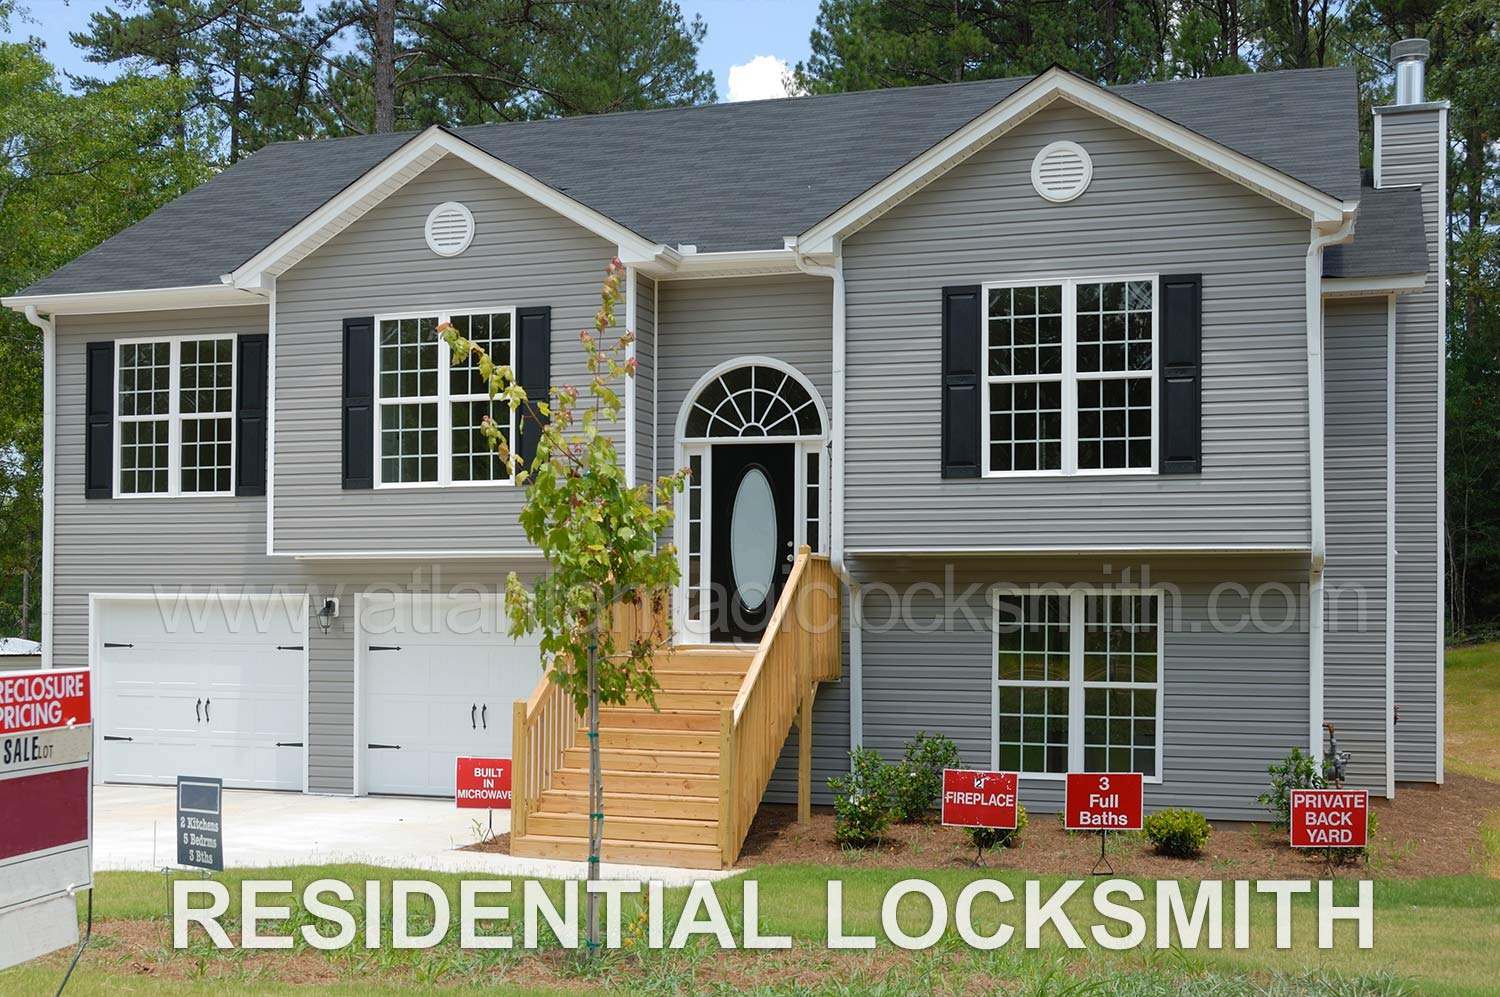 college-park-locksmith-residential